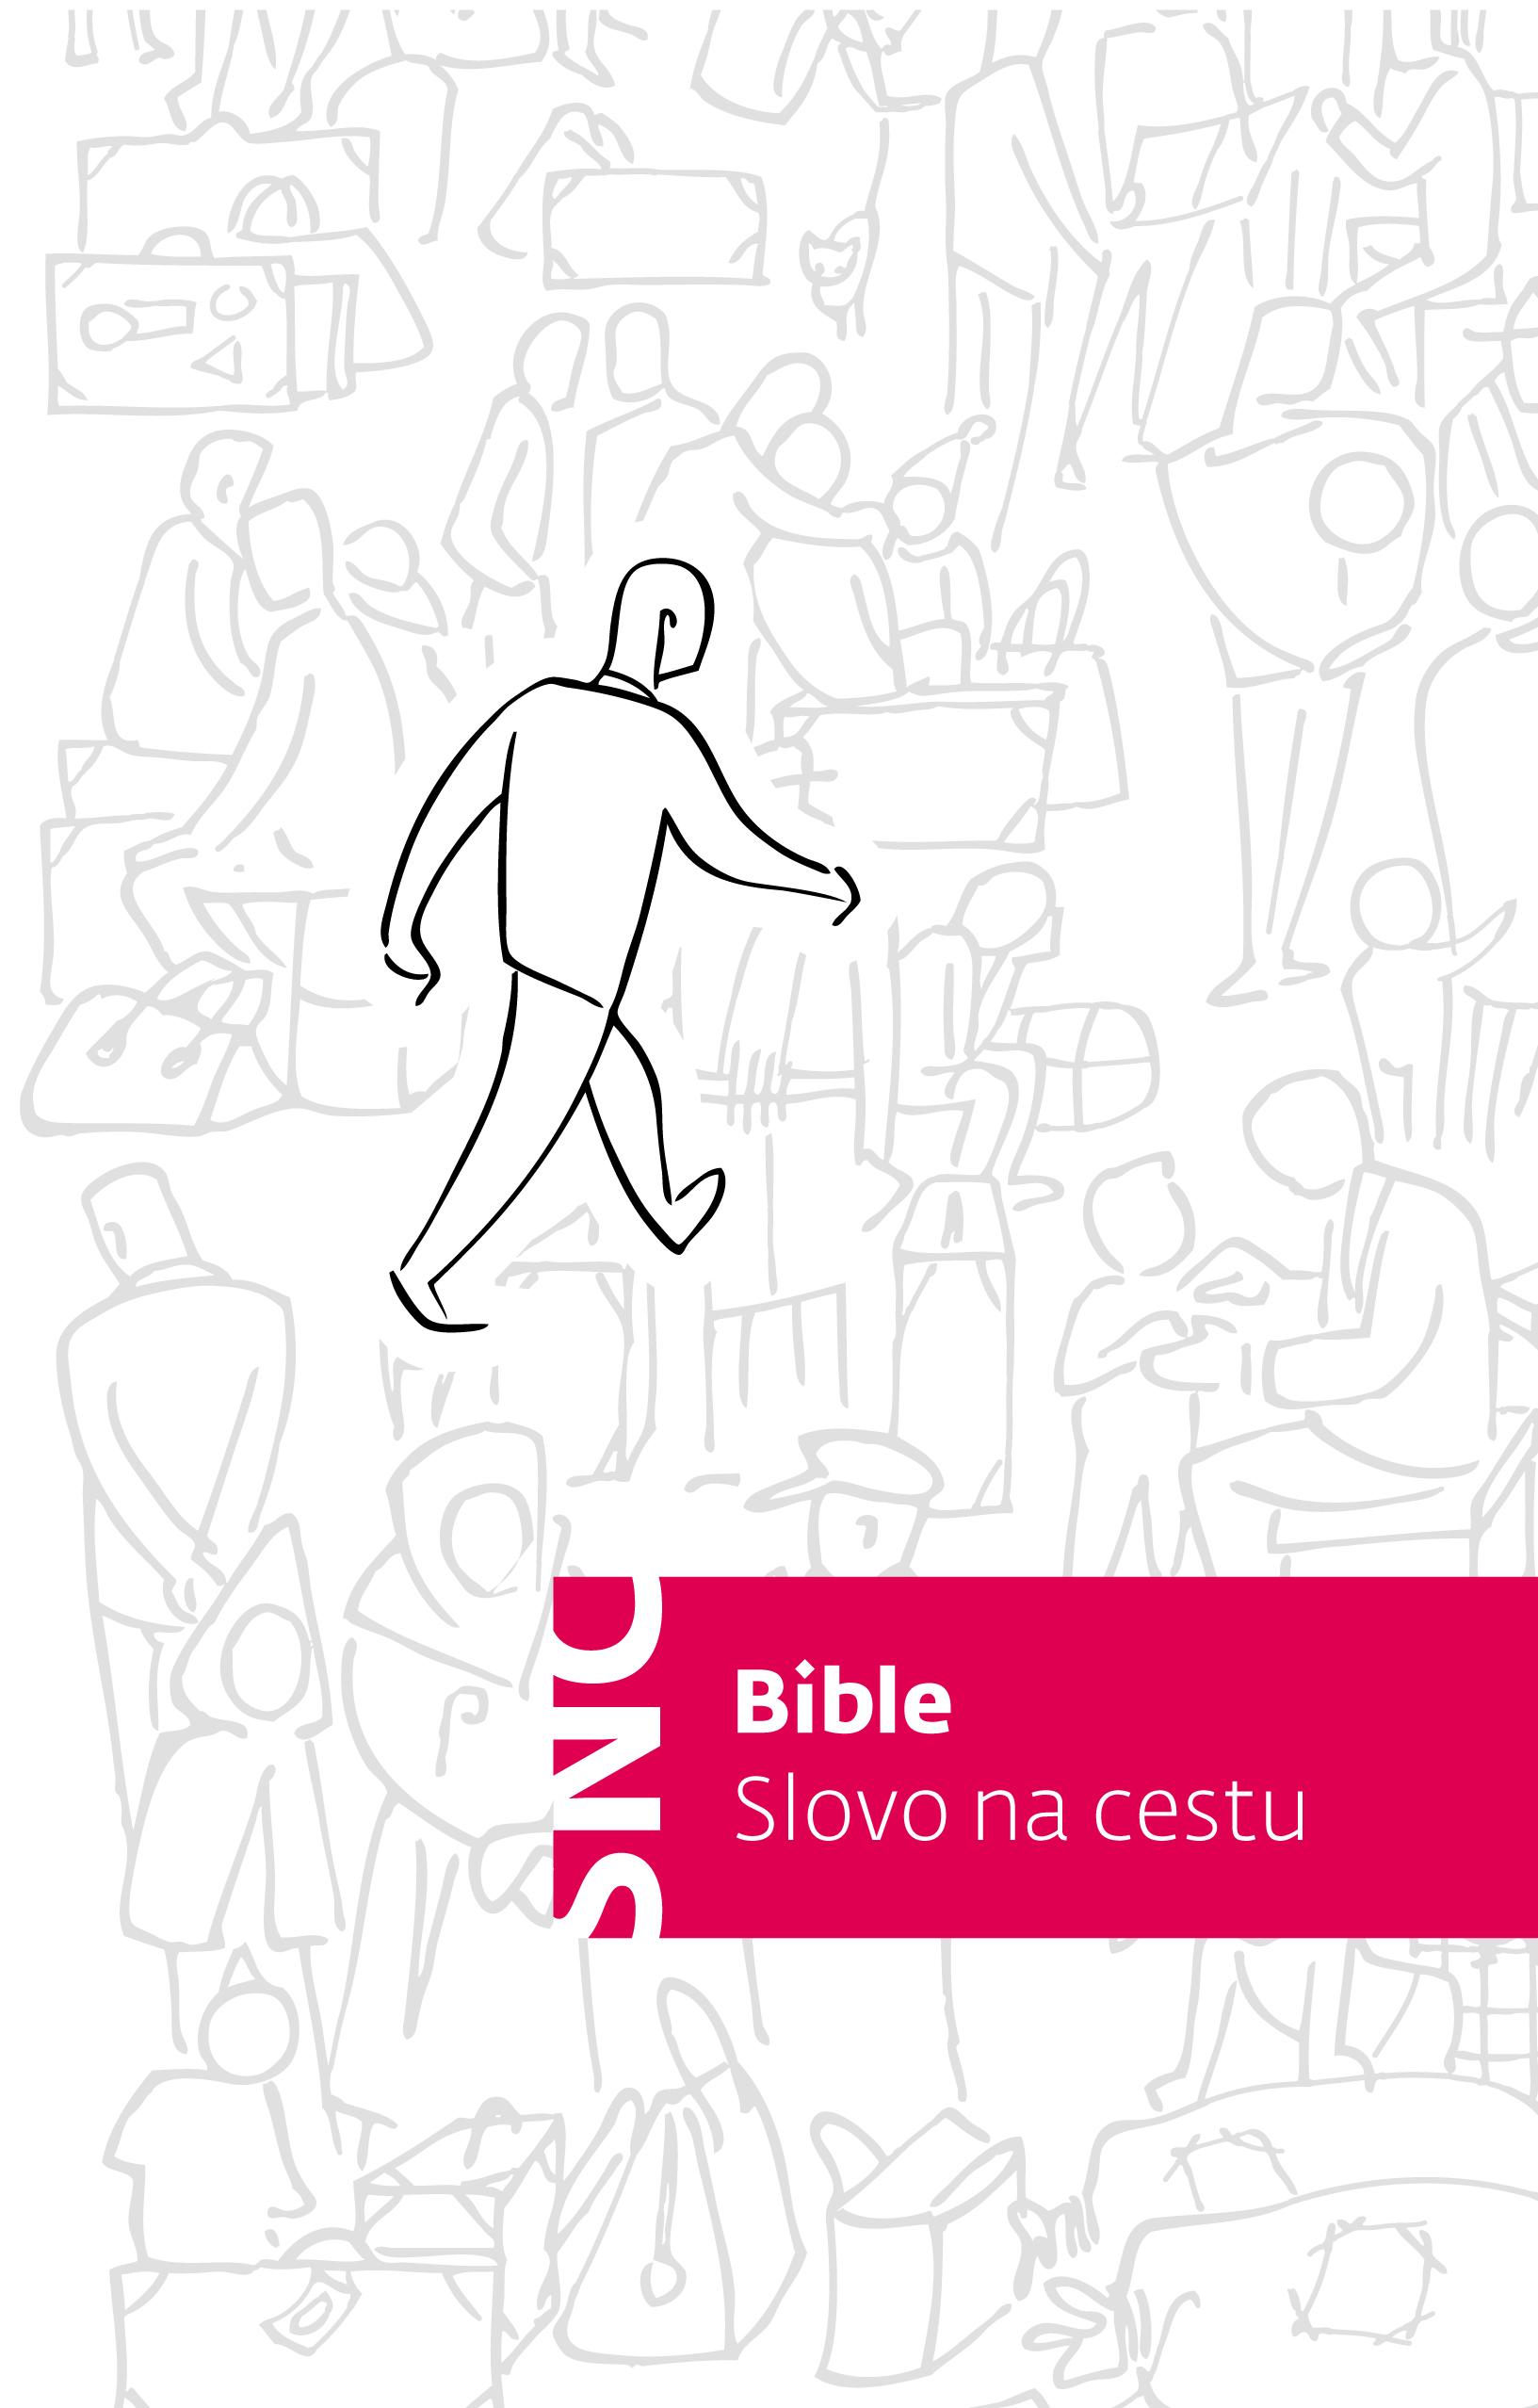 Slovo na cestu - Bible s ilustracemi